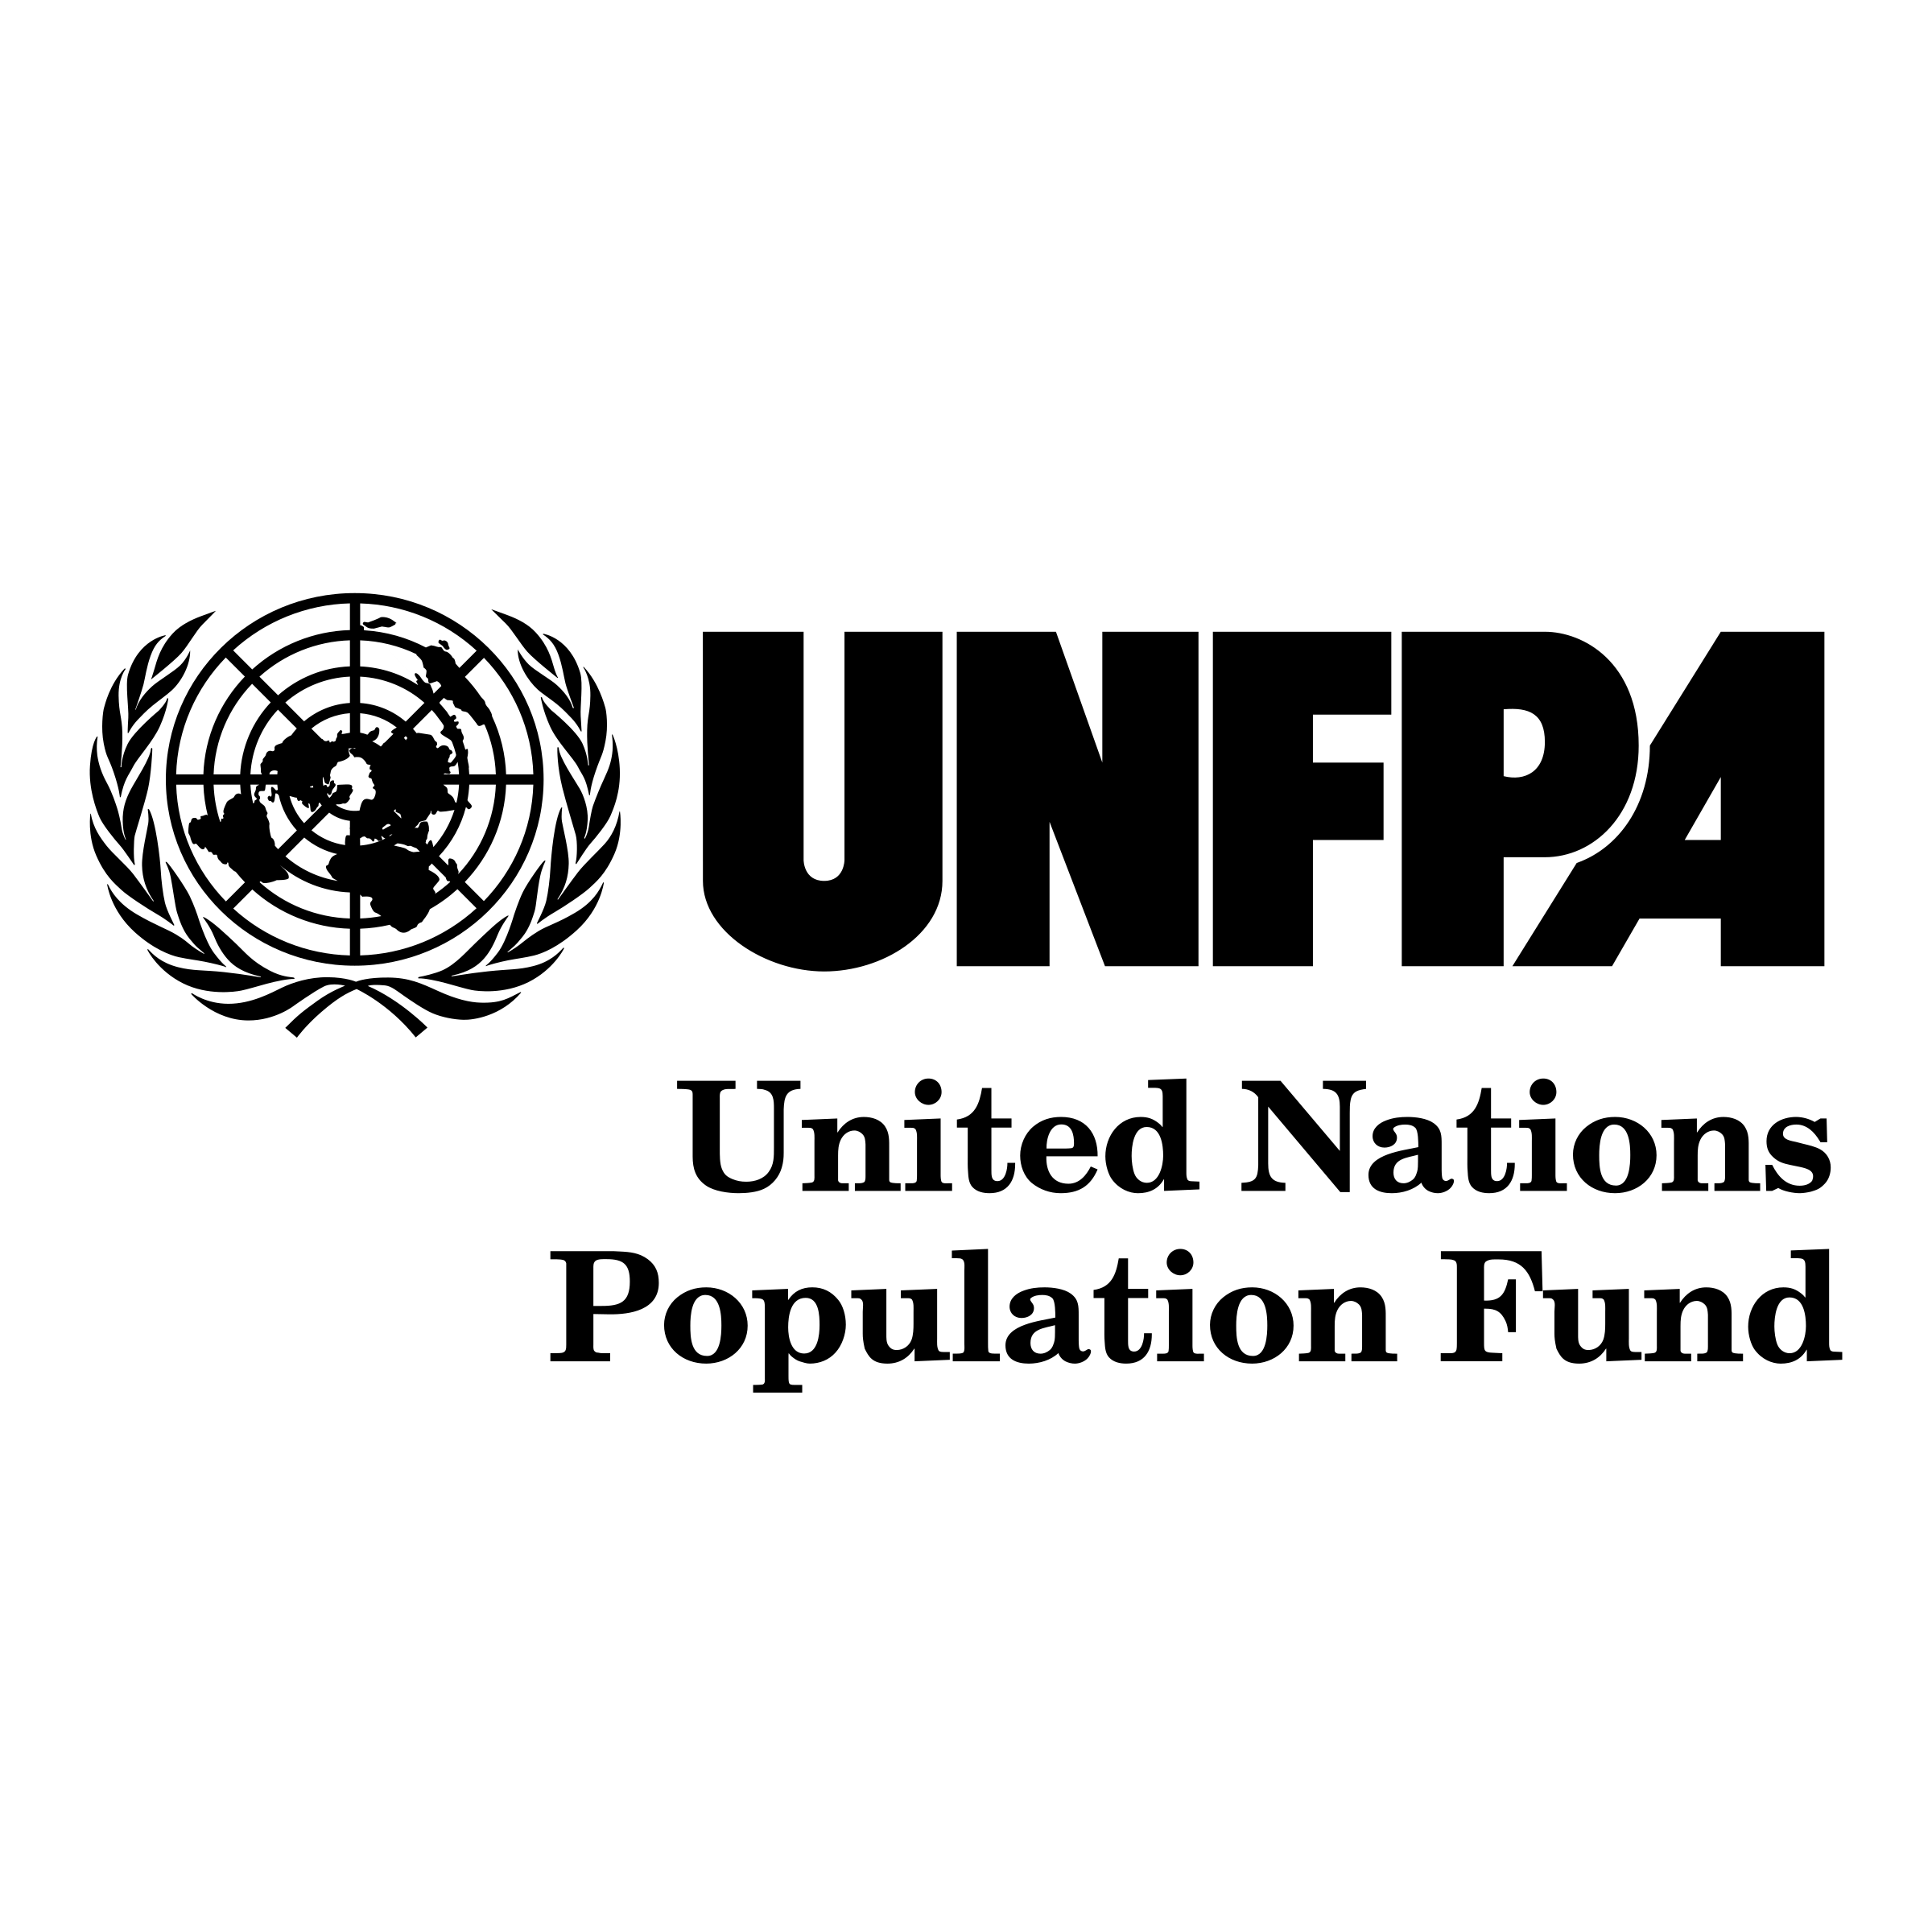 UNFPA Logo - UNFPA Logo PNG Transparent & SVG Vector - Freebie Supply